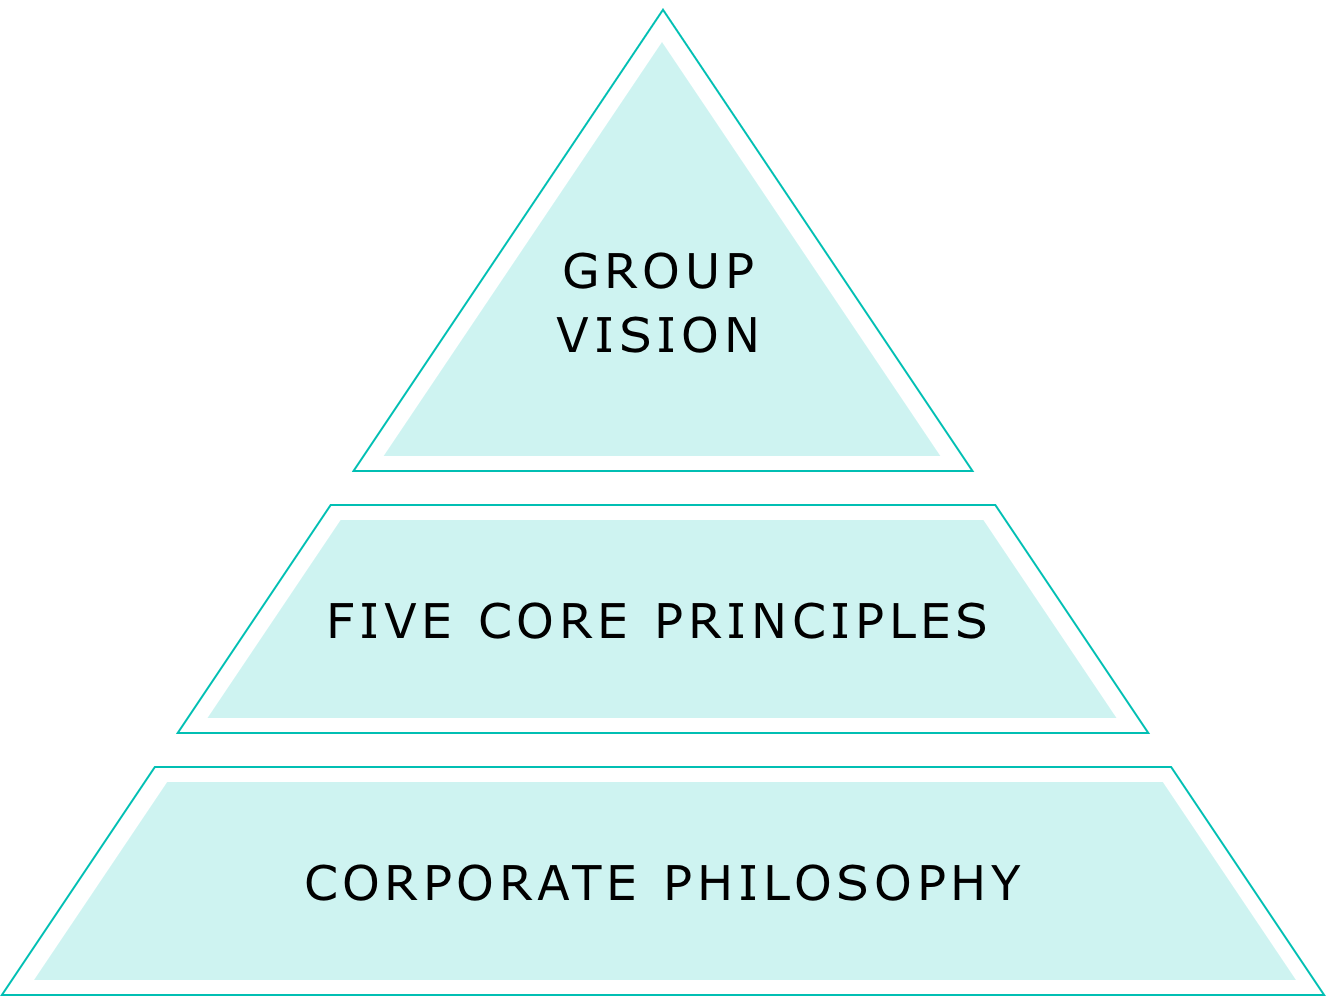 Group Vision,Five Core Principles,Corporate Philosophy